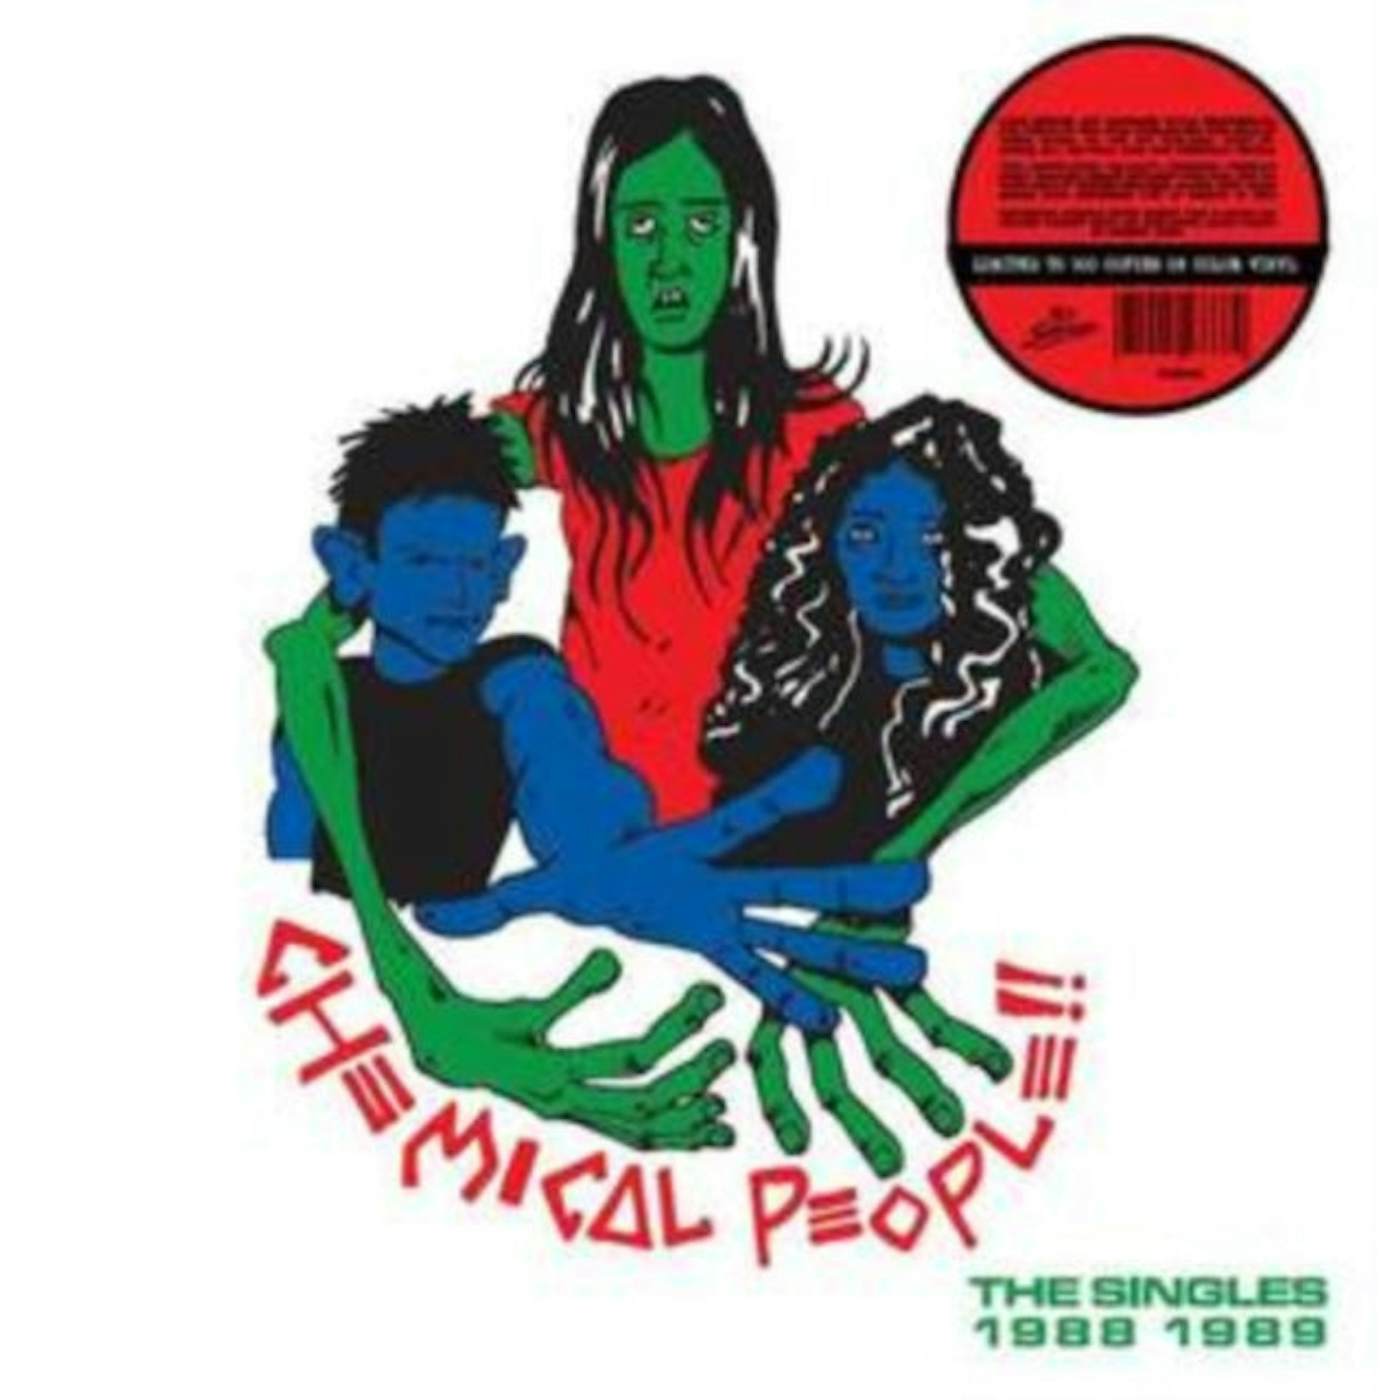 Chemical People LP Vinyl Record - The Singles 19 88-19 89 (Green Vinyl)